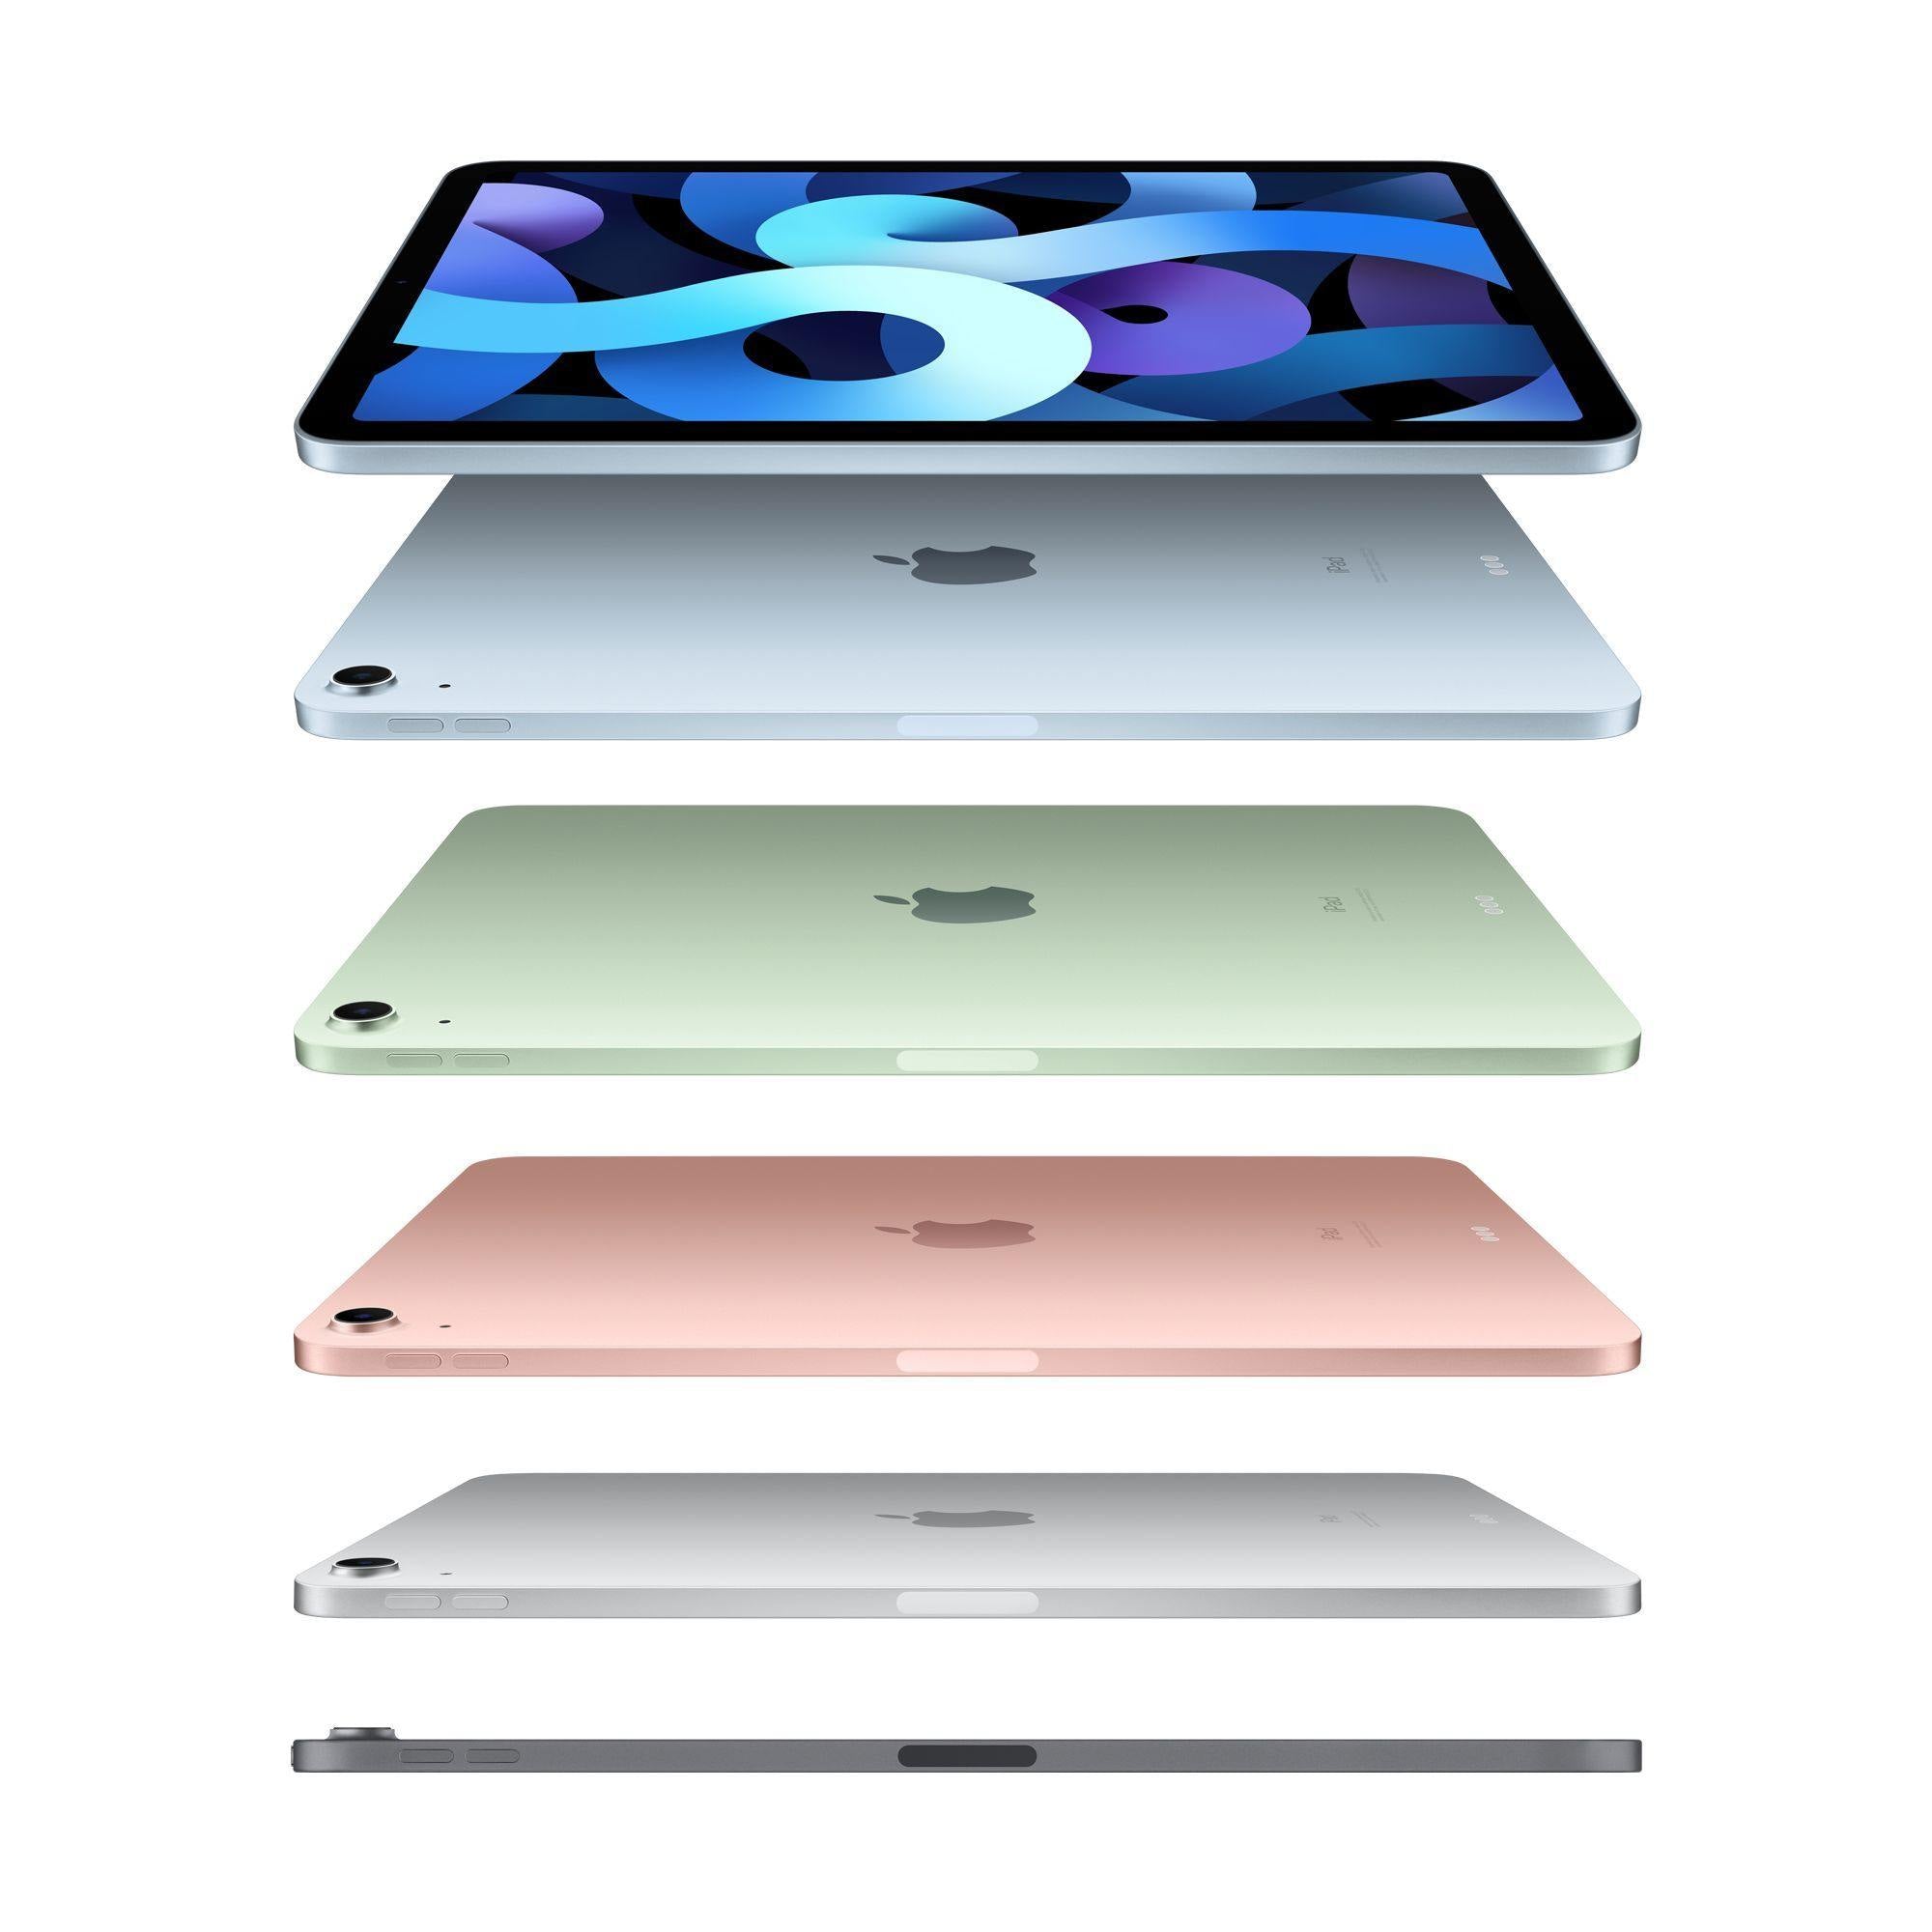 Apple iPad Air 4 64GB/256GB - Mainz Empire Pte Ltd